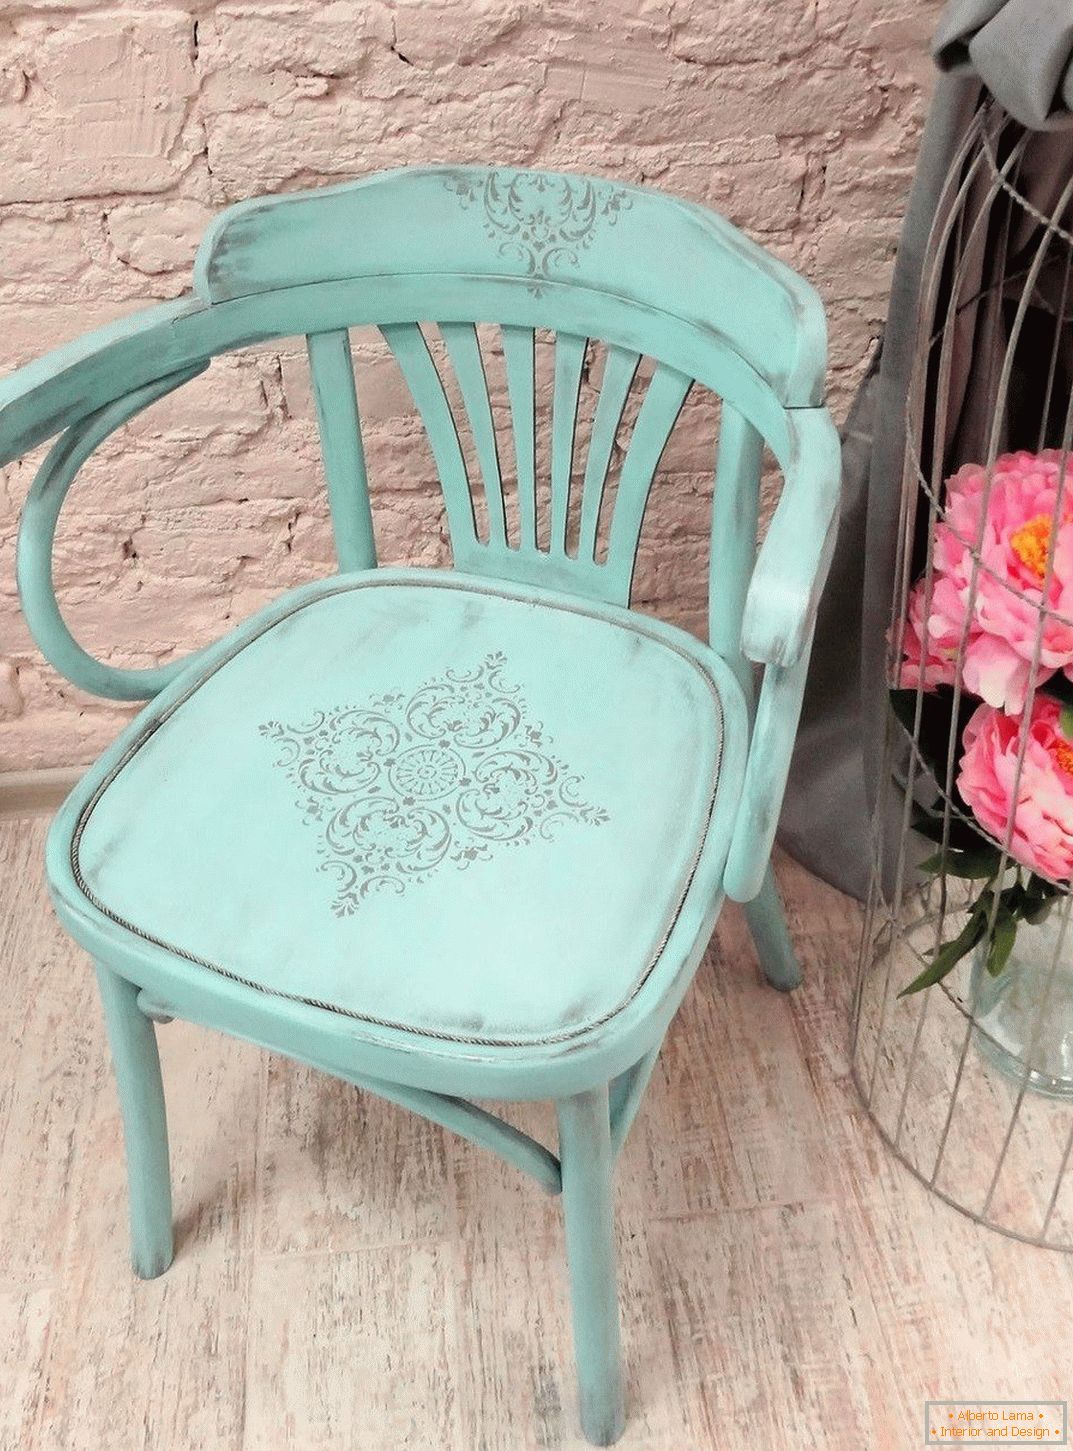 Украсна столица са матрицом и бојом